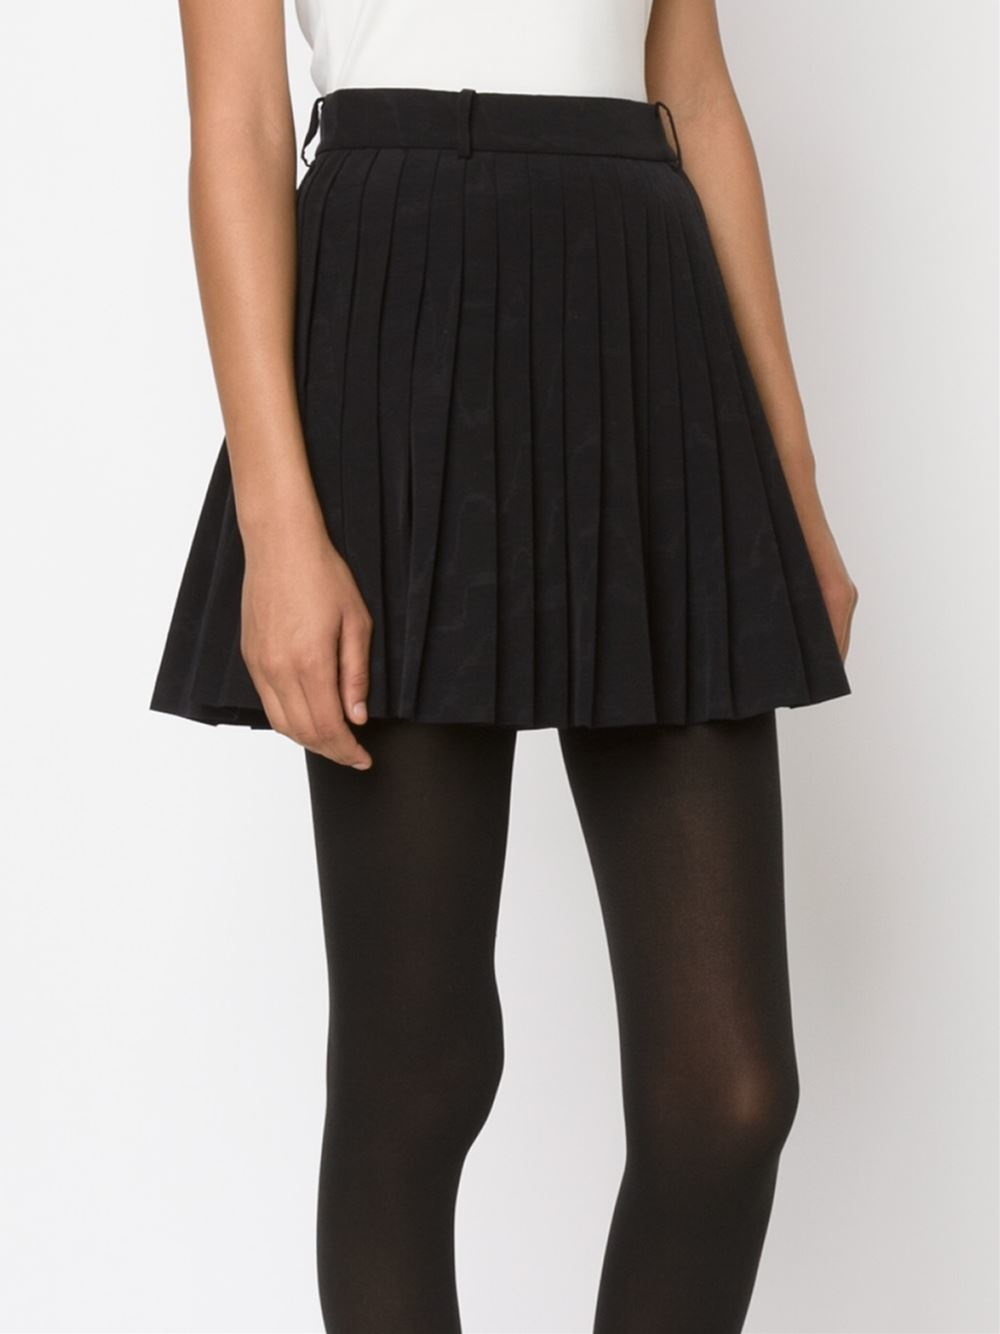 Lyst - Thom Browne Pleated Mini-skirt in Black